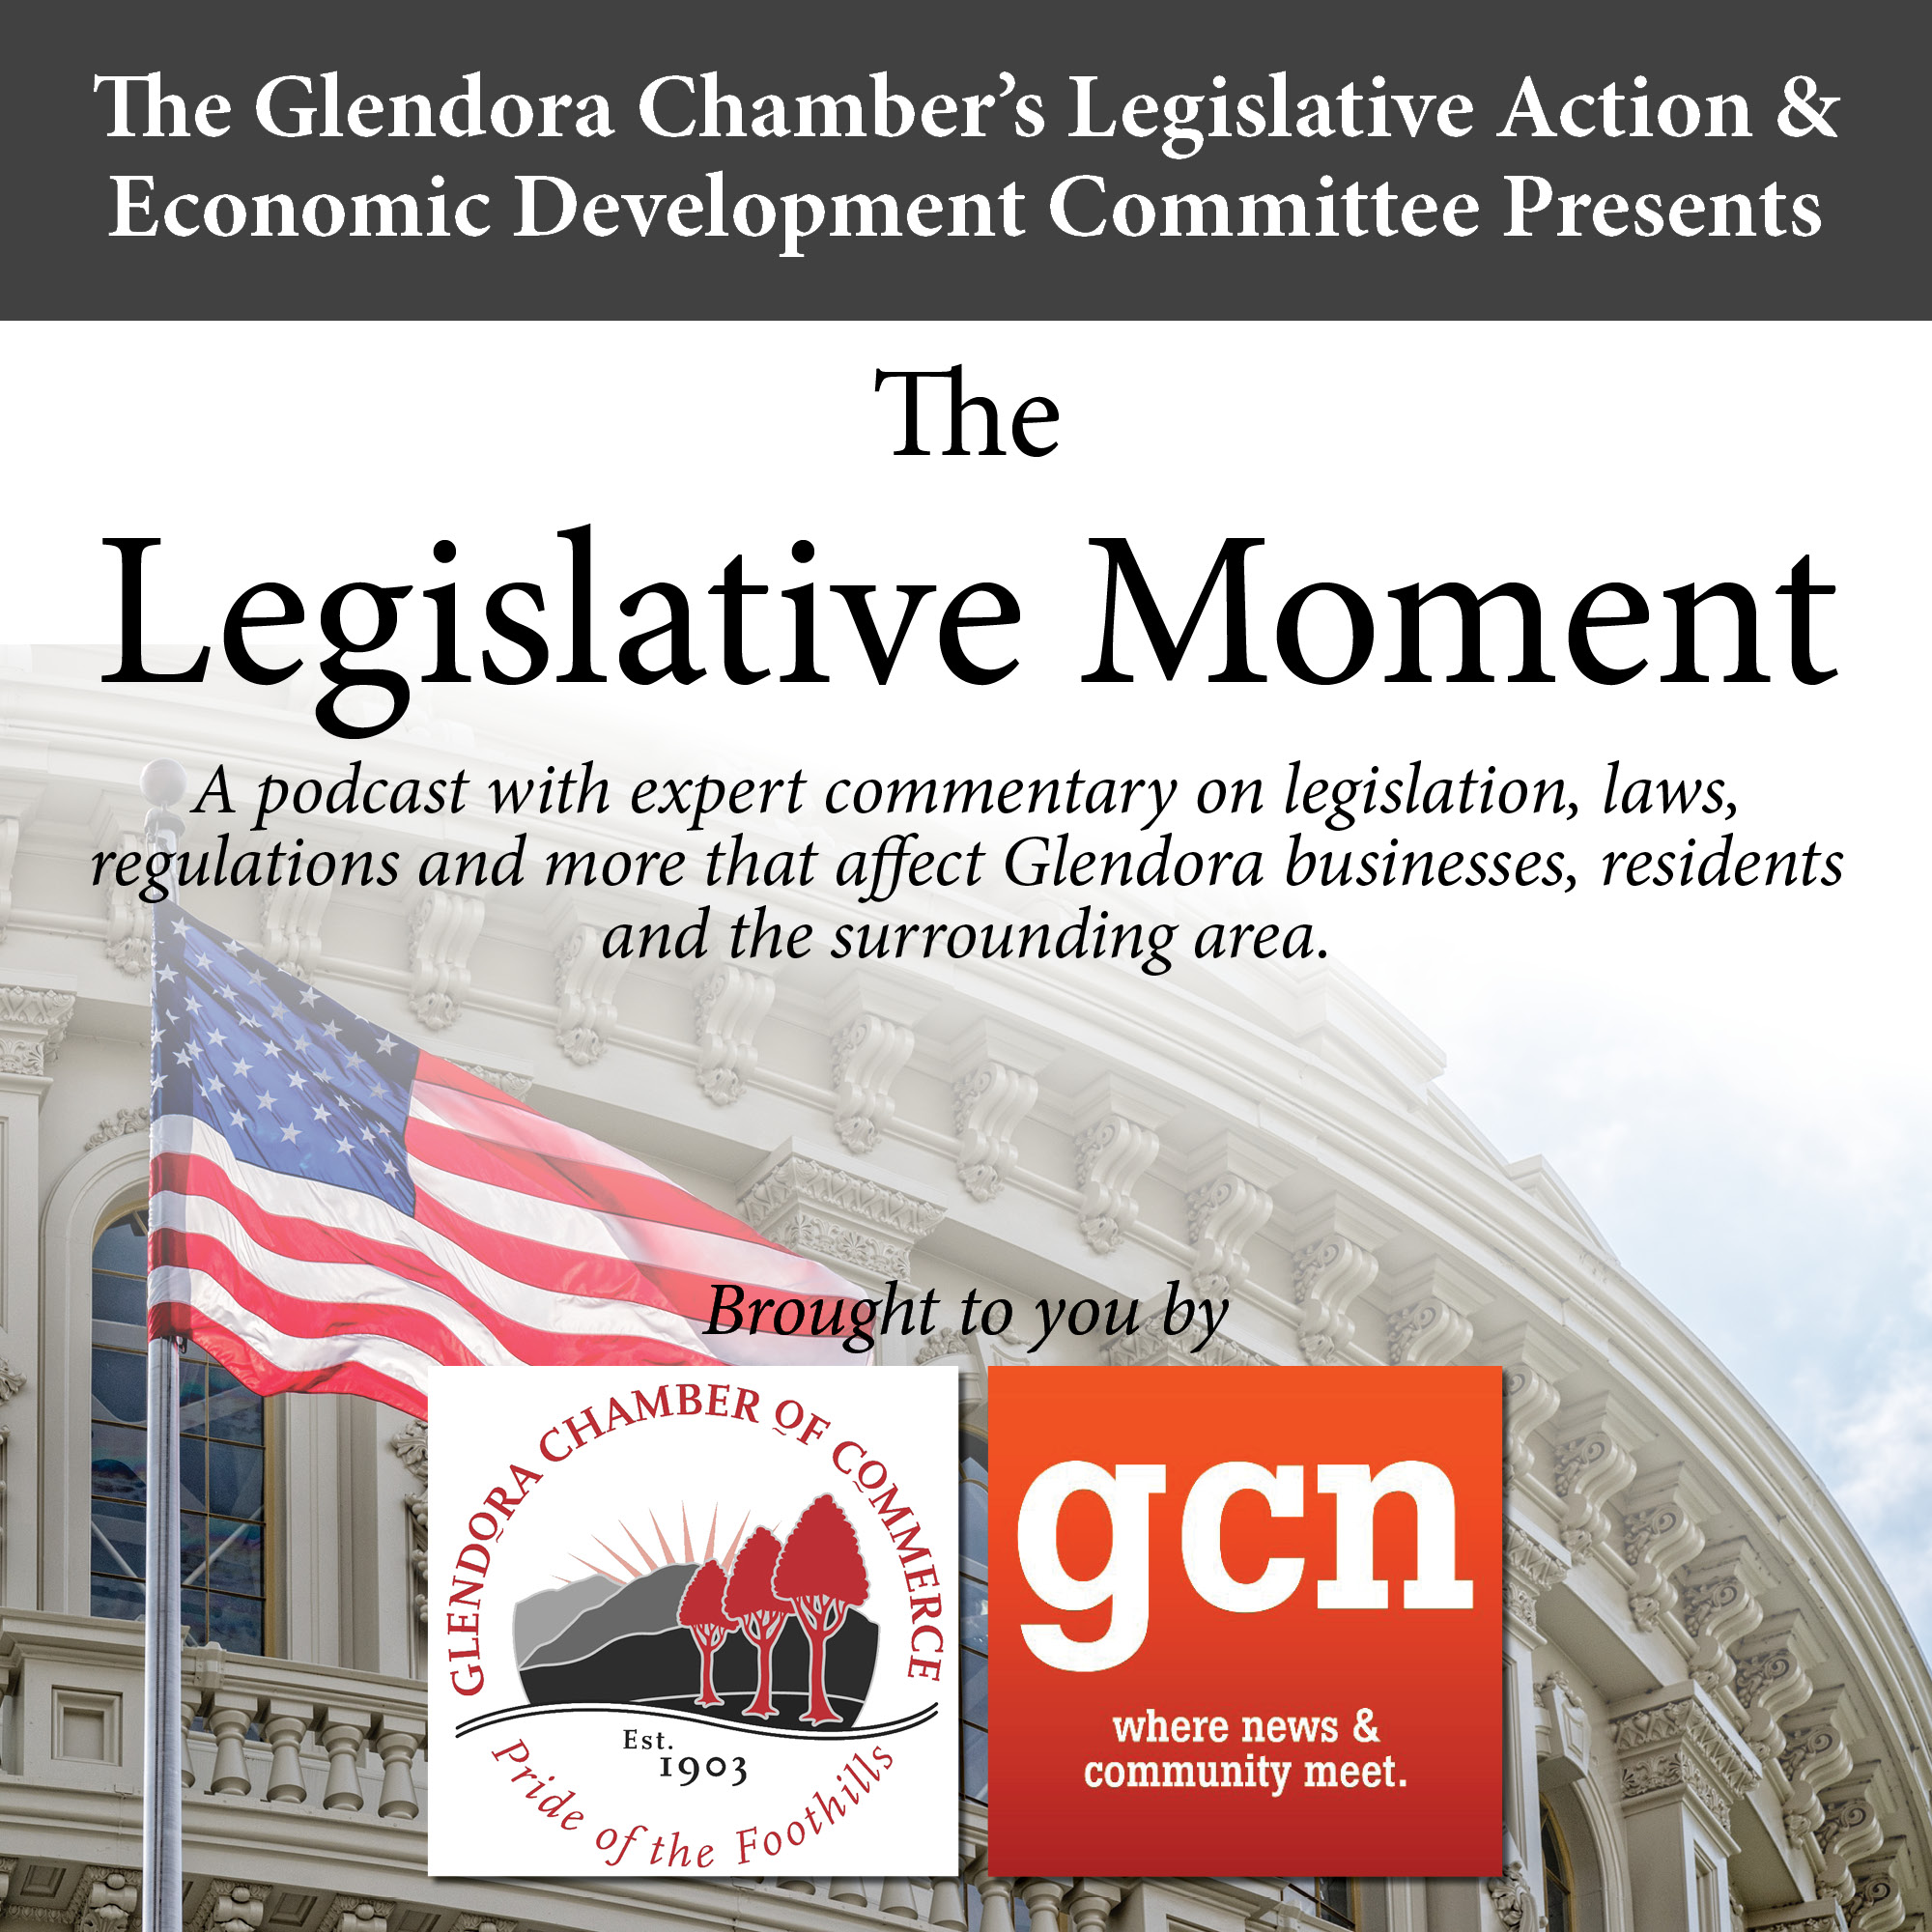 The Legislative Moment